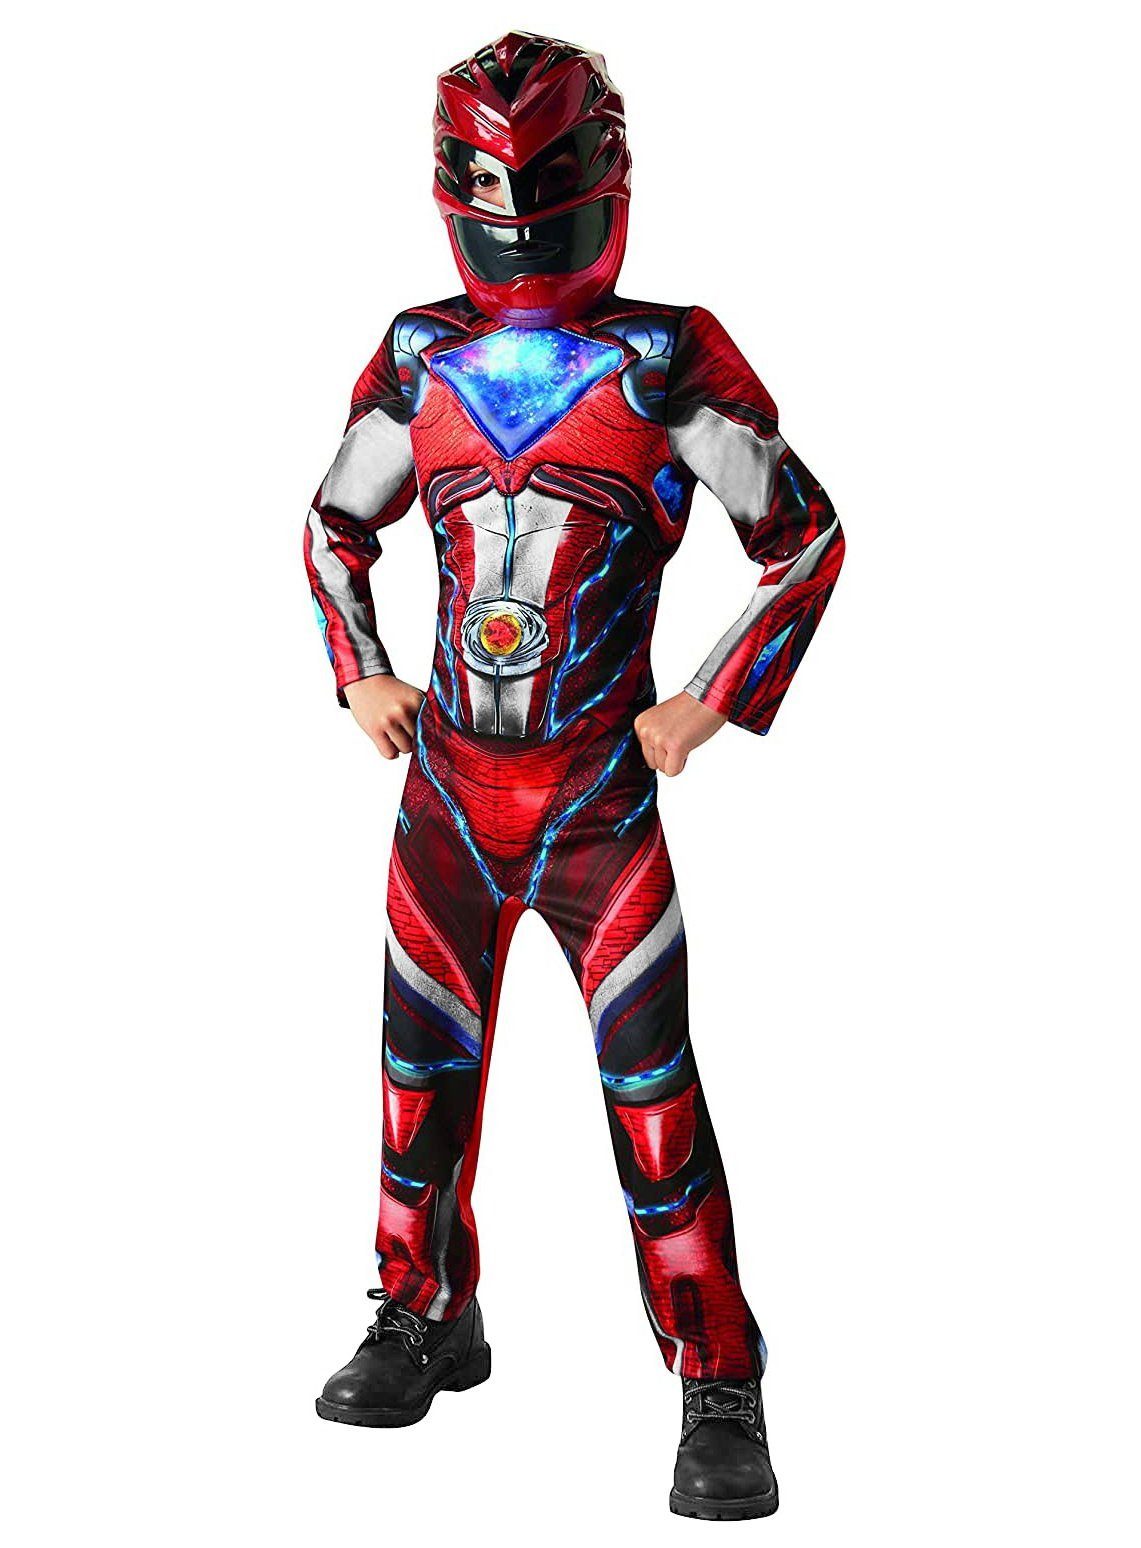 Metamorph Kostüm Power Rangers - Roter Ranger Kostüm für Kinder, Offizielles Kostüm des Red Rangers aus dem Power Rangers-Film